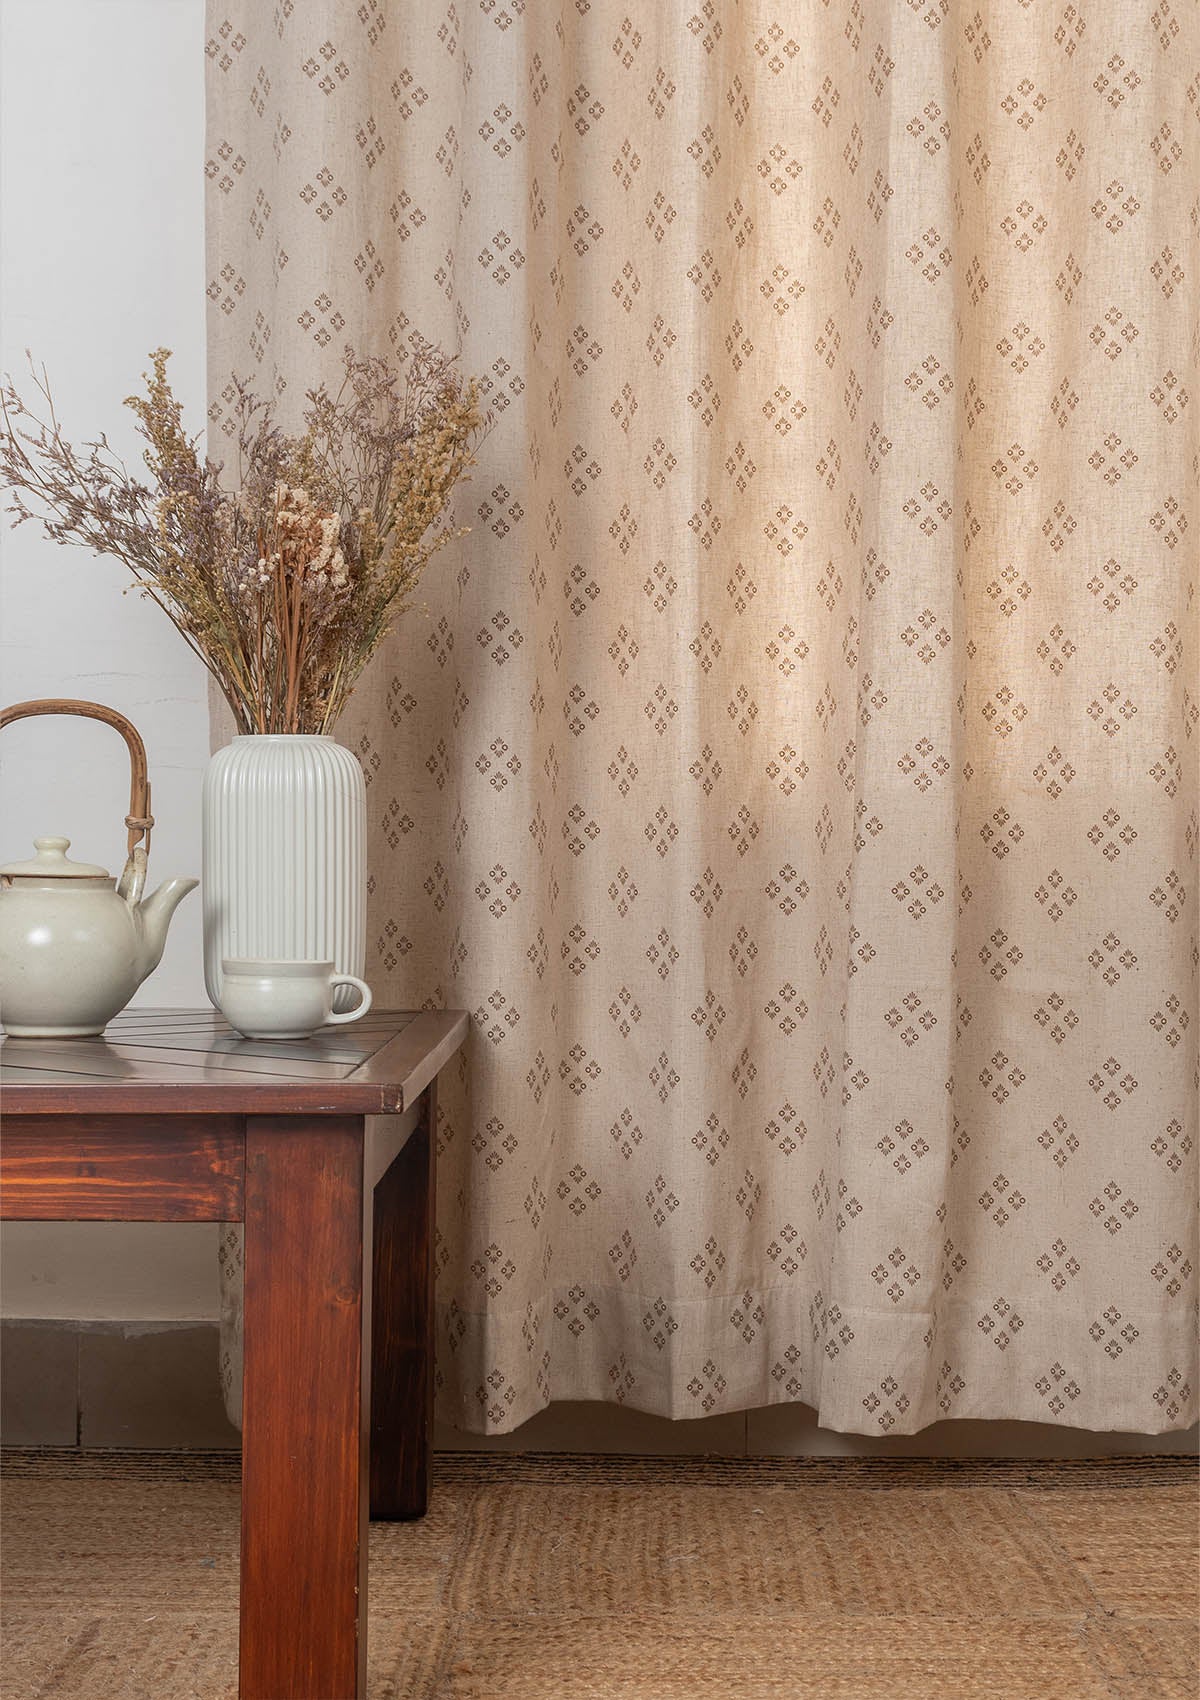 Harvest linen cotton minimal design curtain for living room - Room darkening - Brown